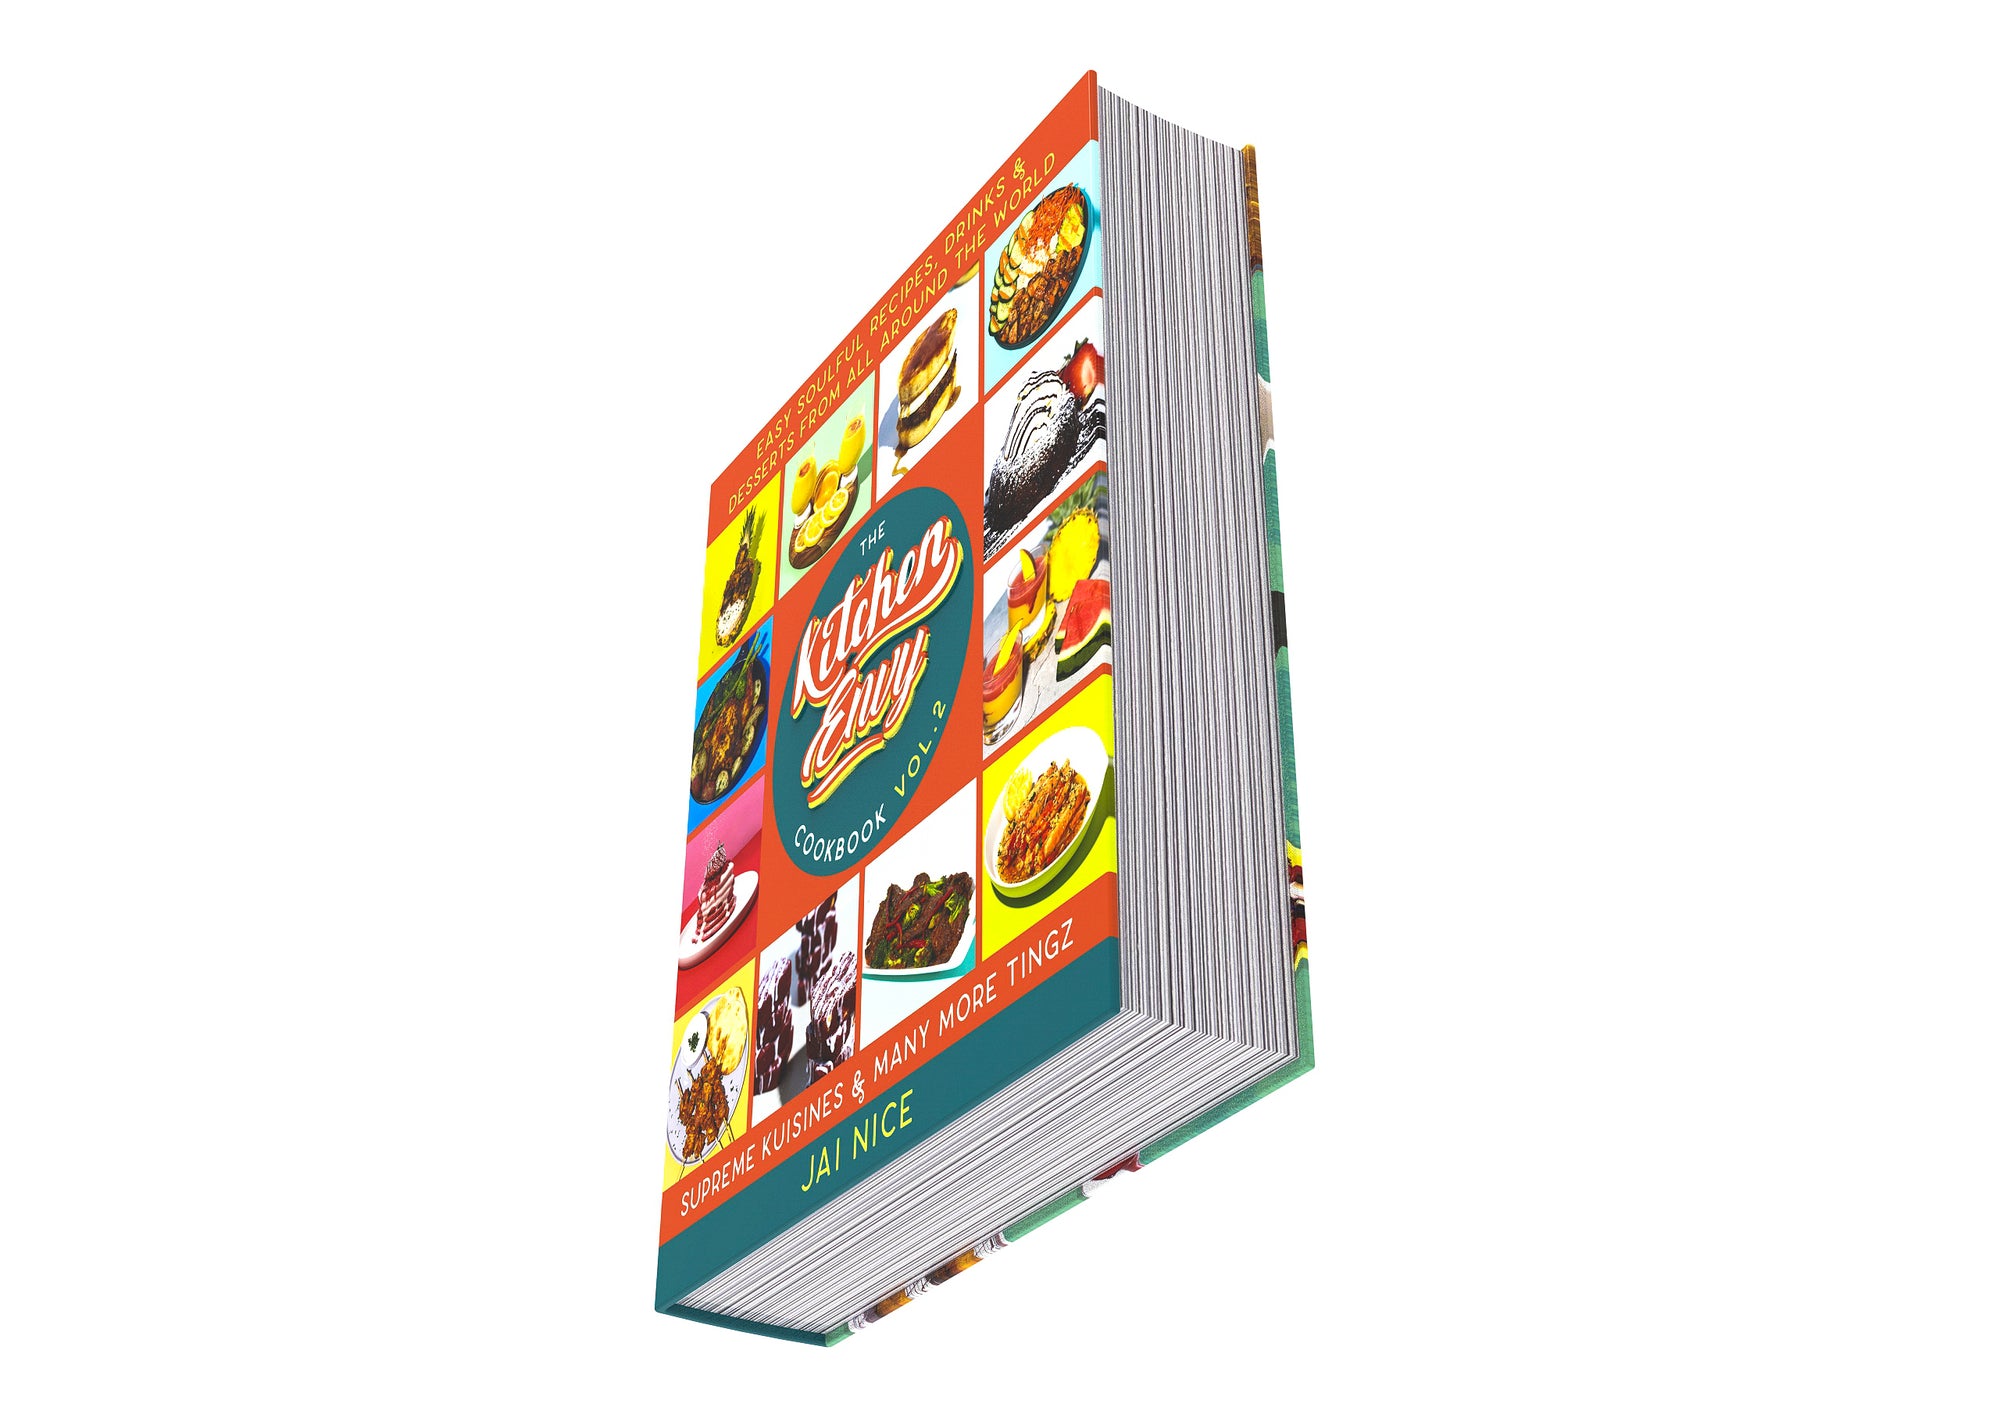 Kitchen Envy Cookbook Vol 1 & 2 Bundle Deal - Kitchen Envy